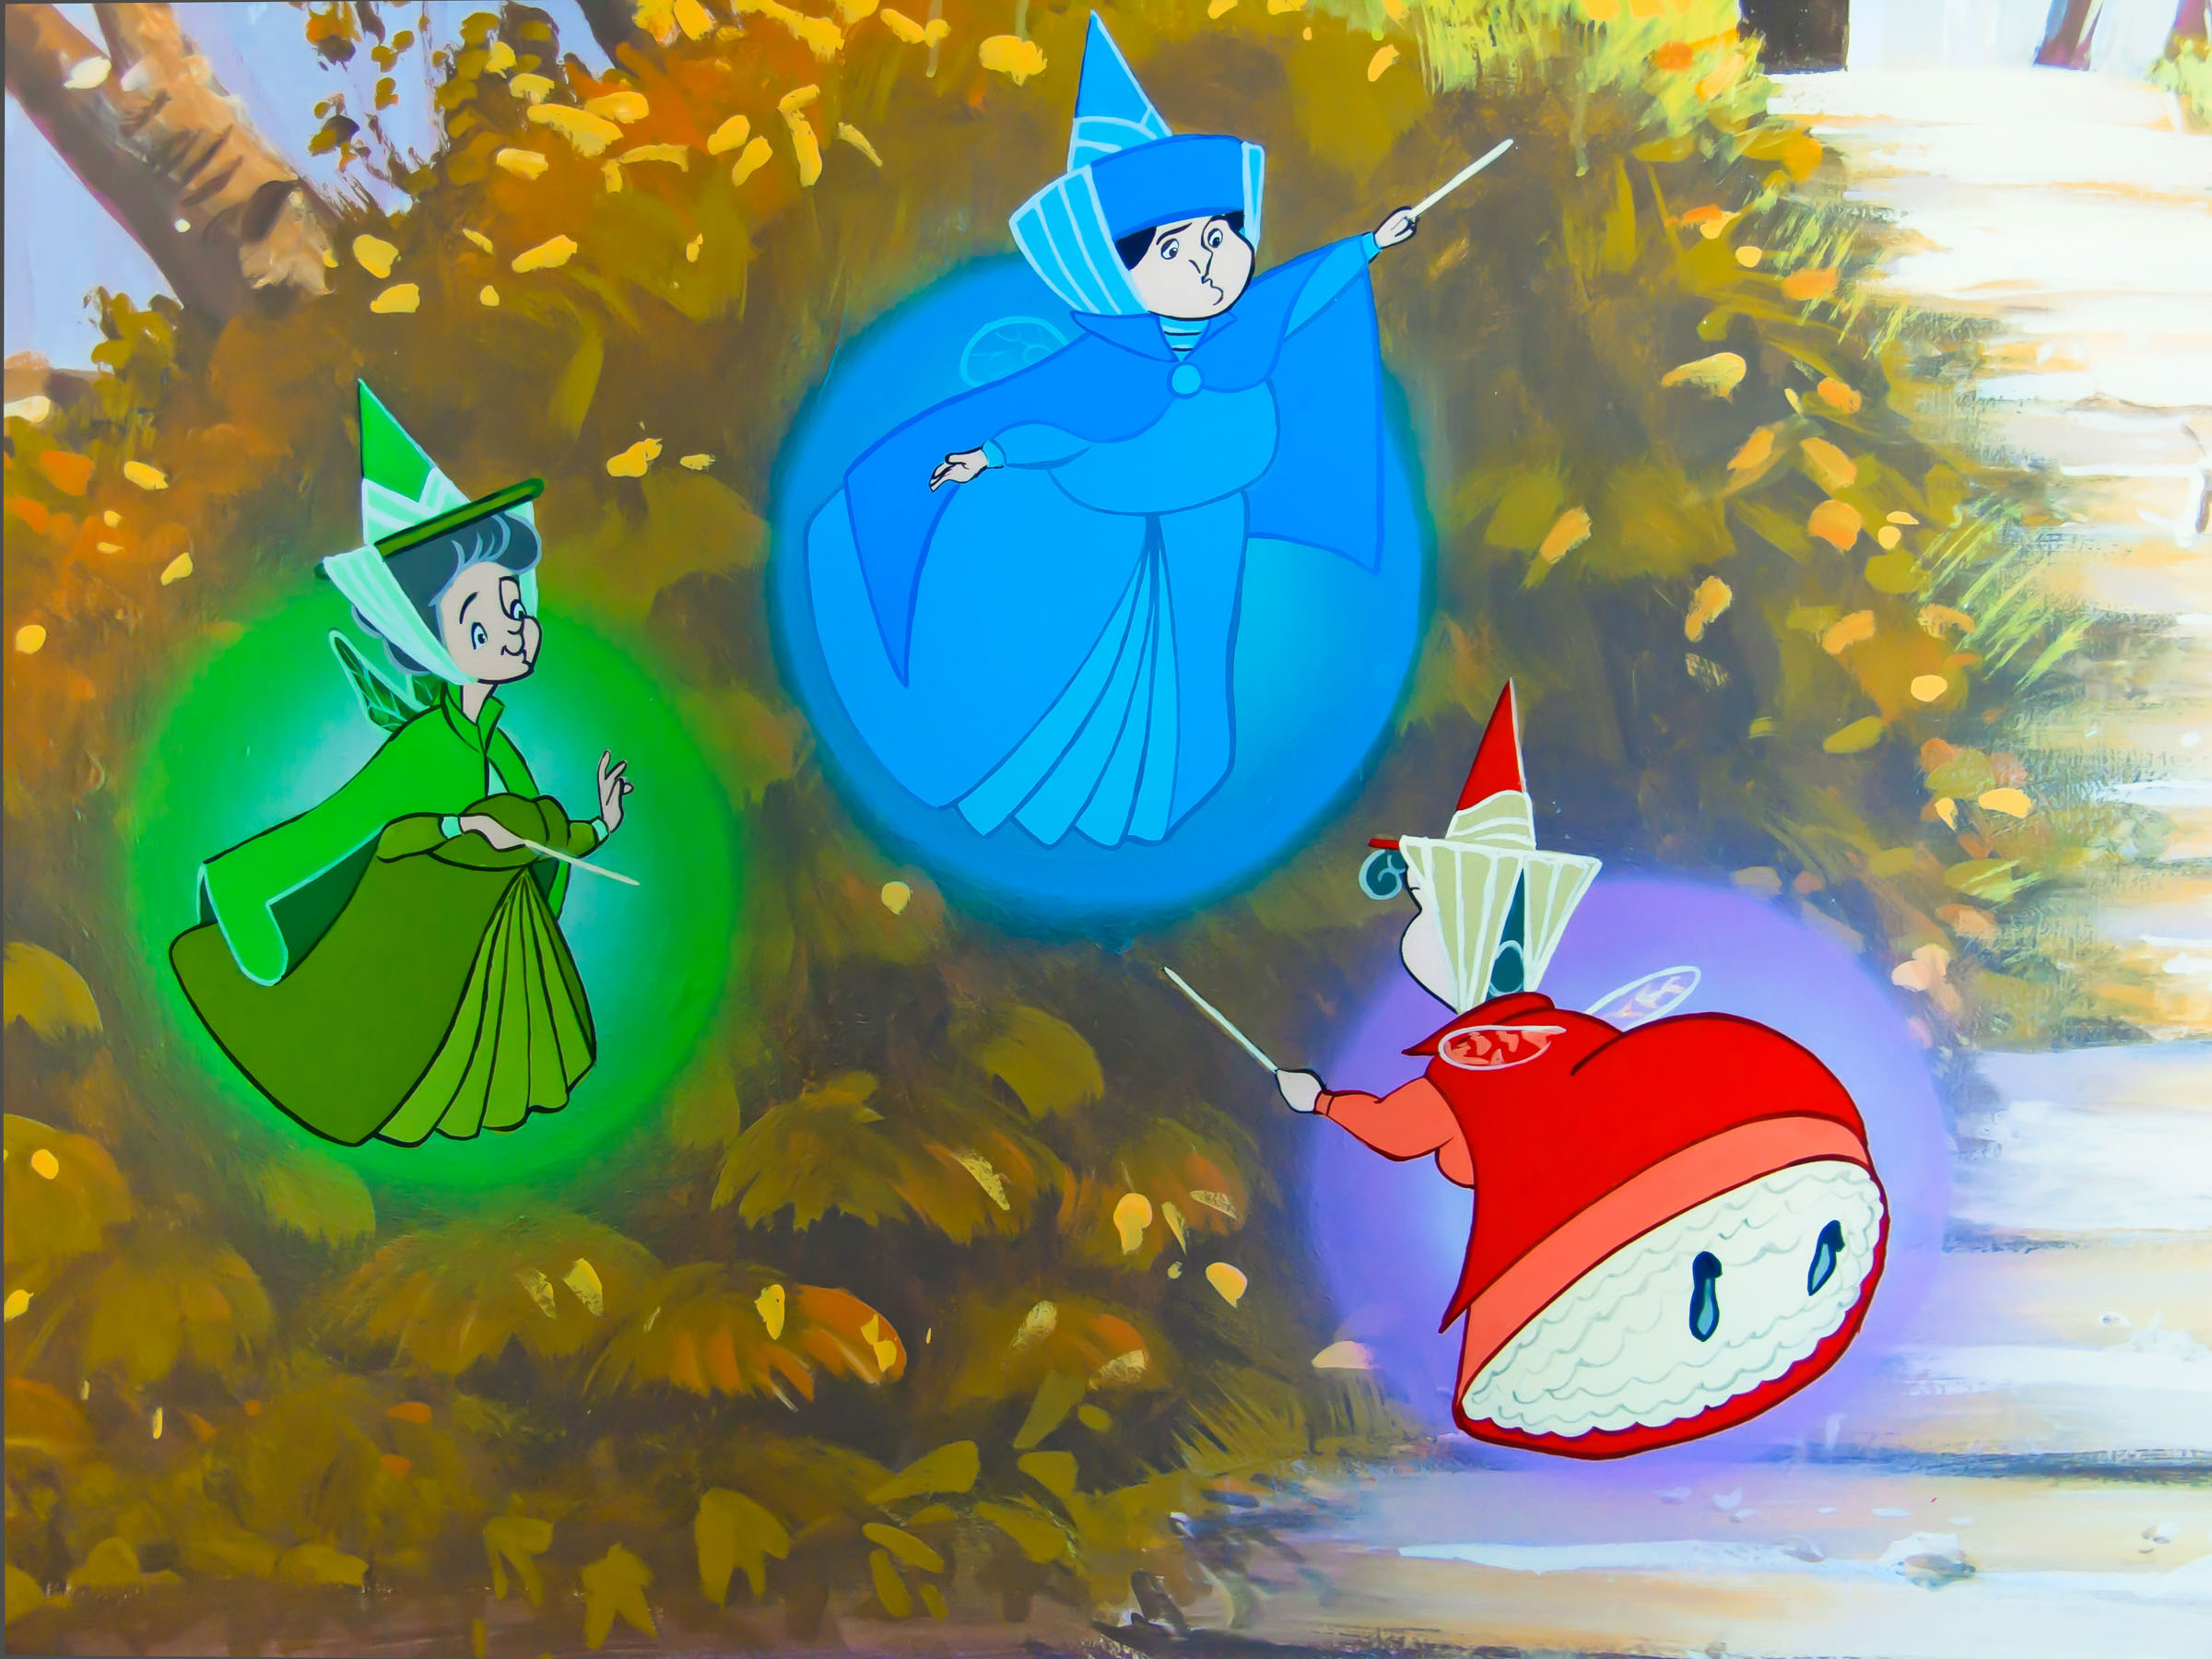 The three fairies from Sleeping Beauty